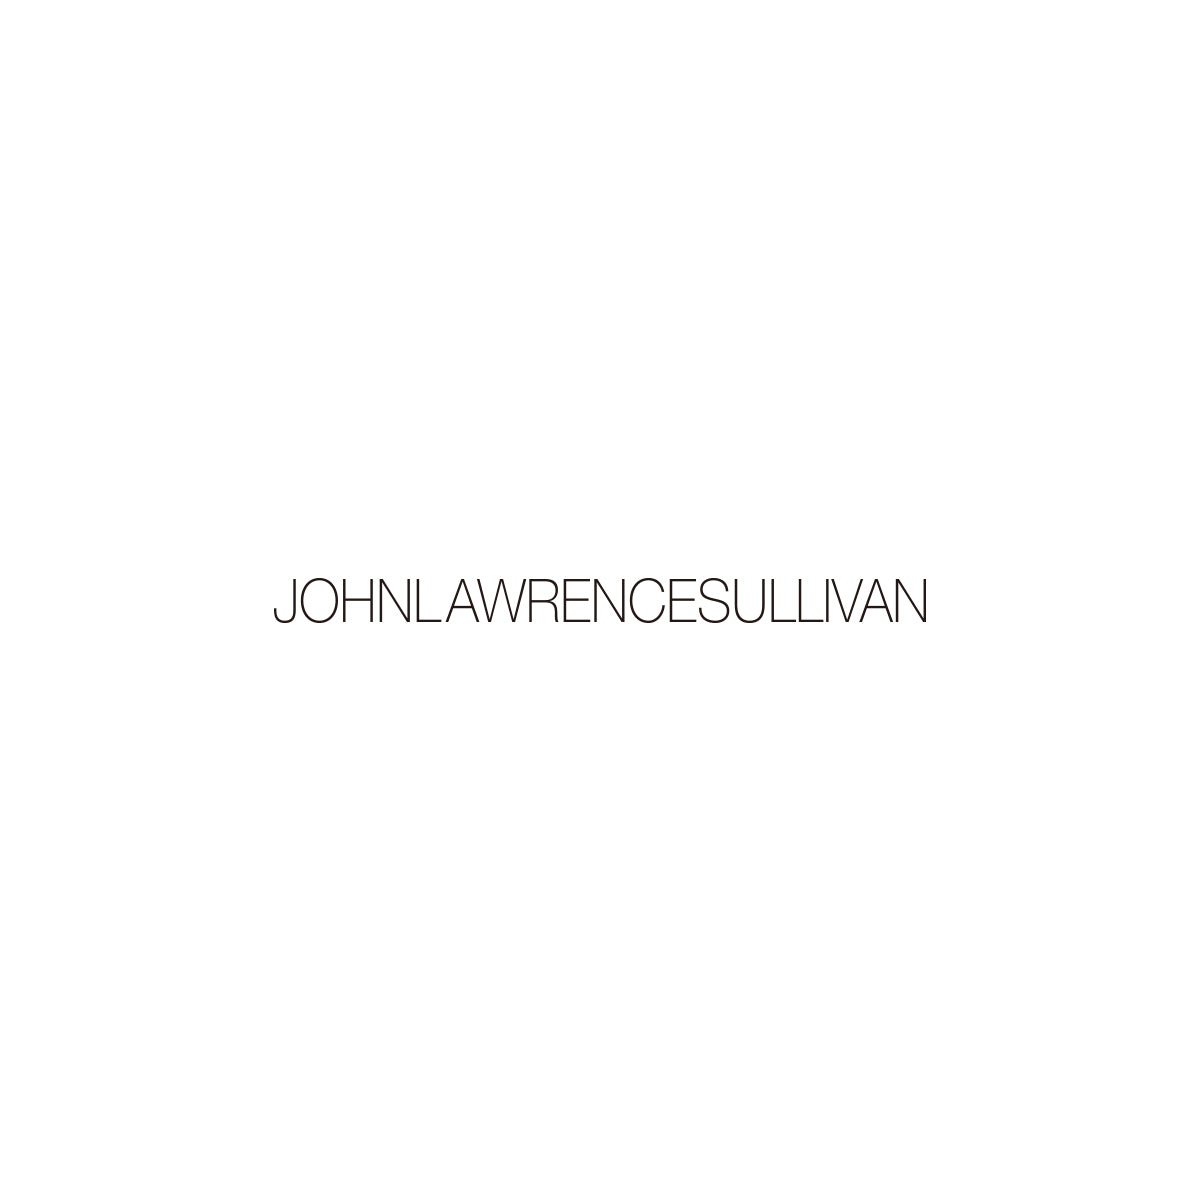 NEW – JOHN LAWRENCE SULLIVAN